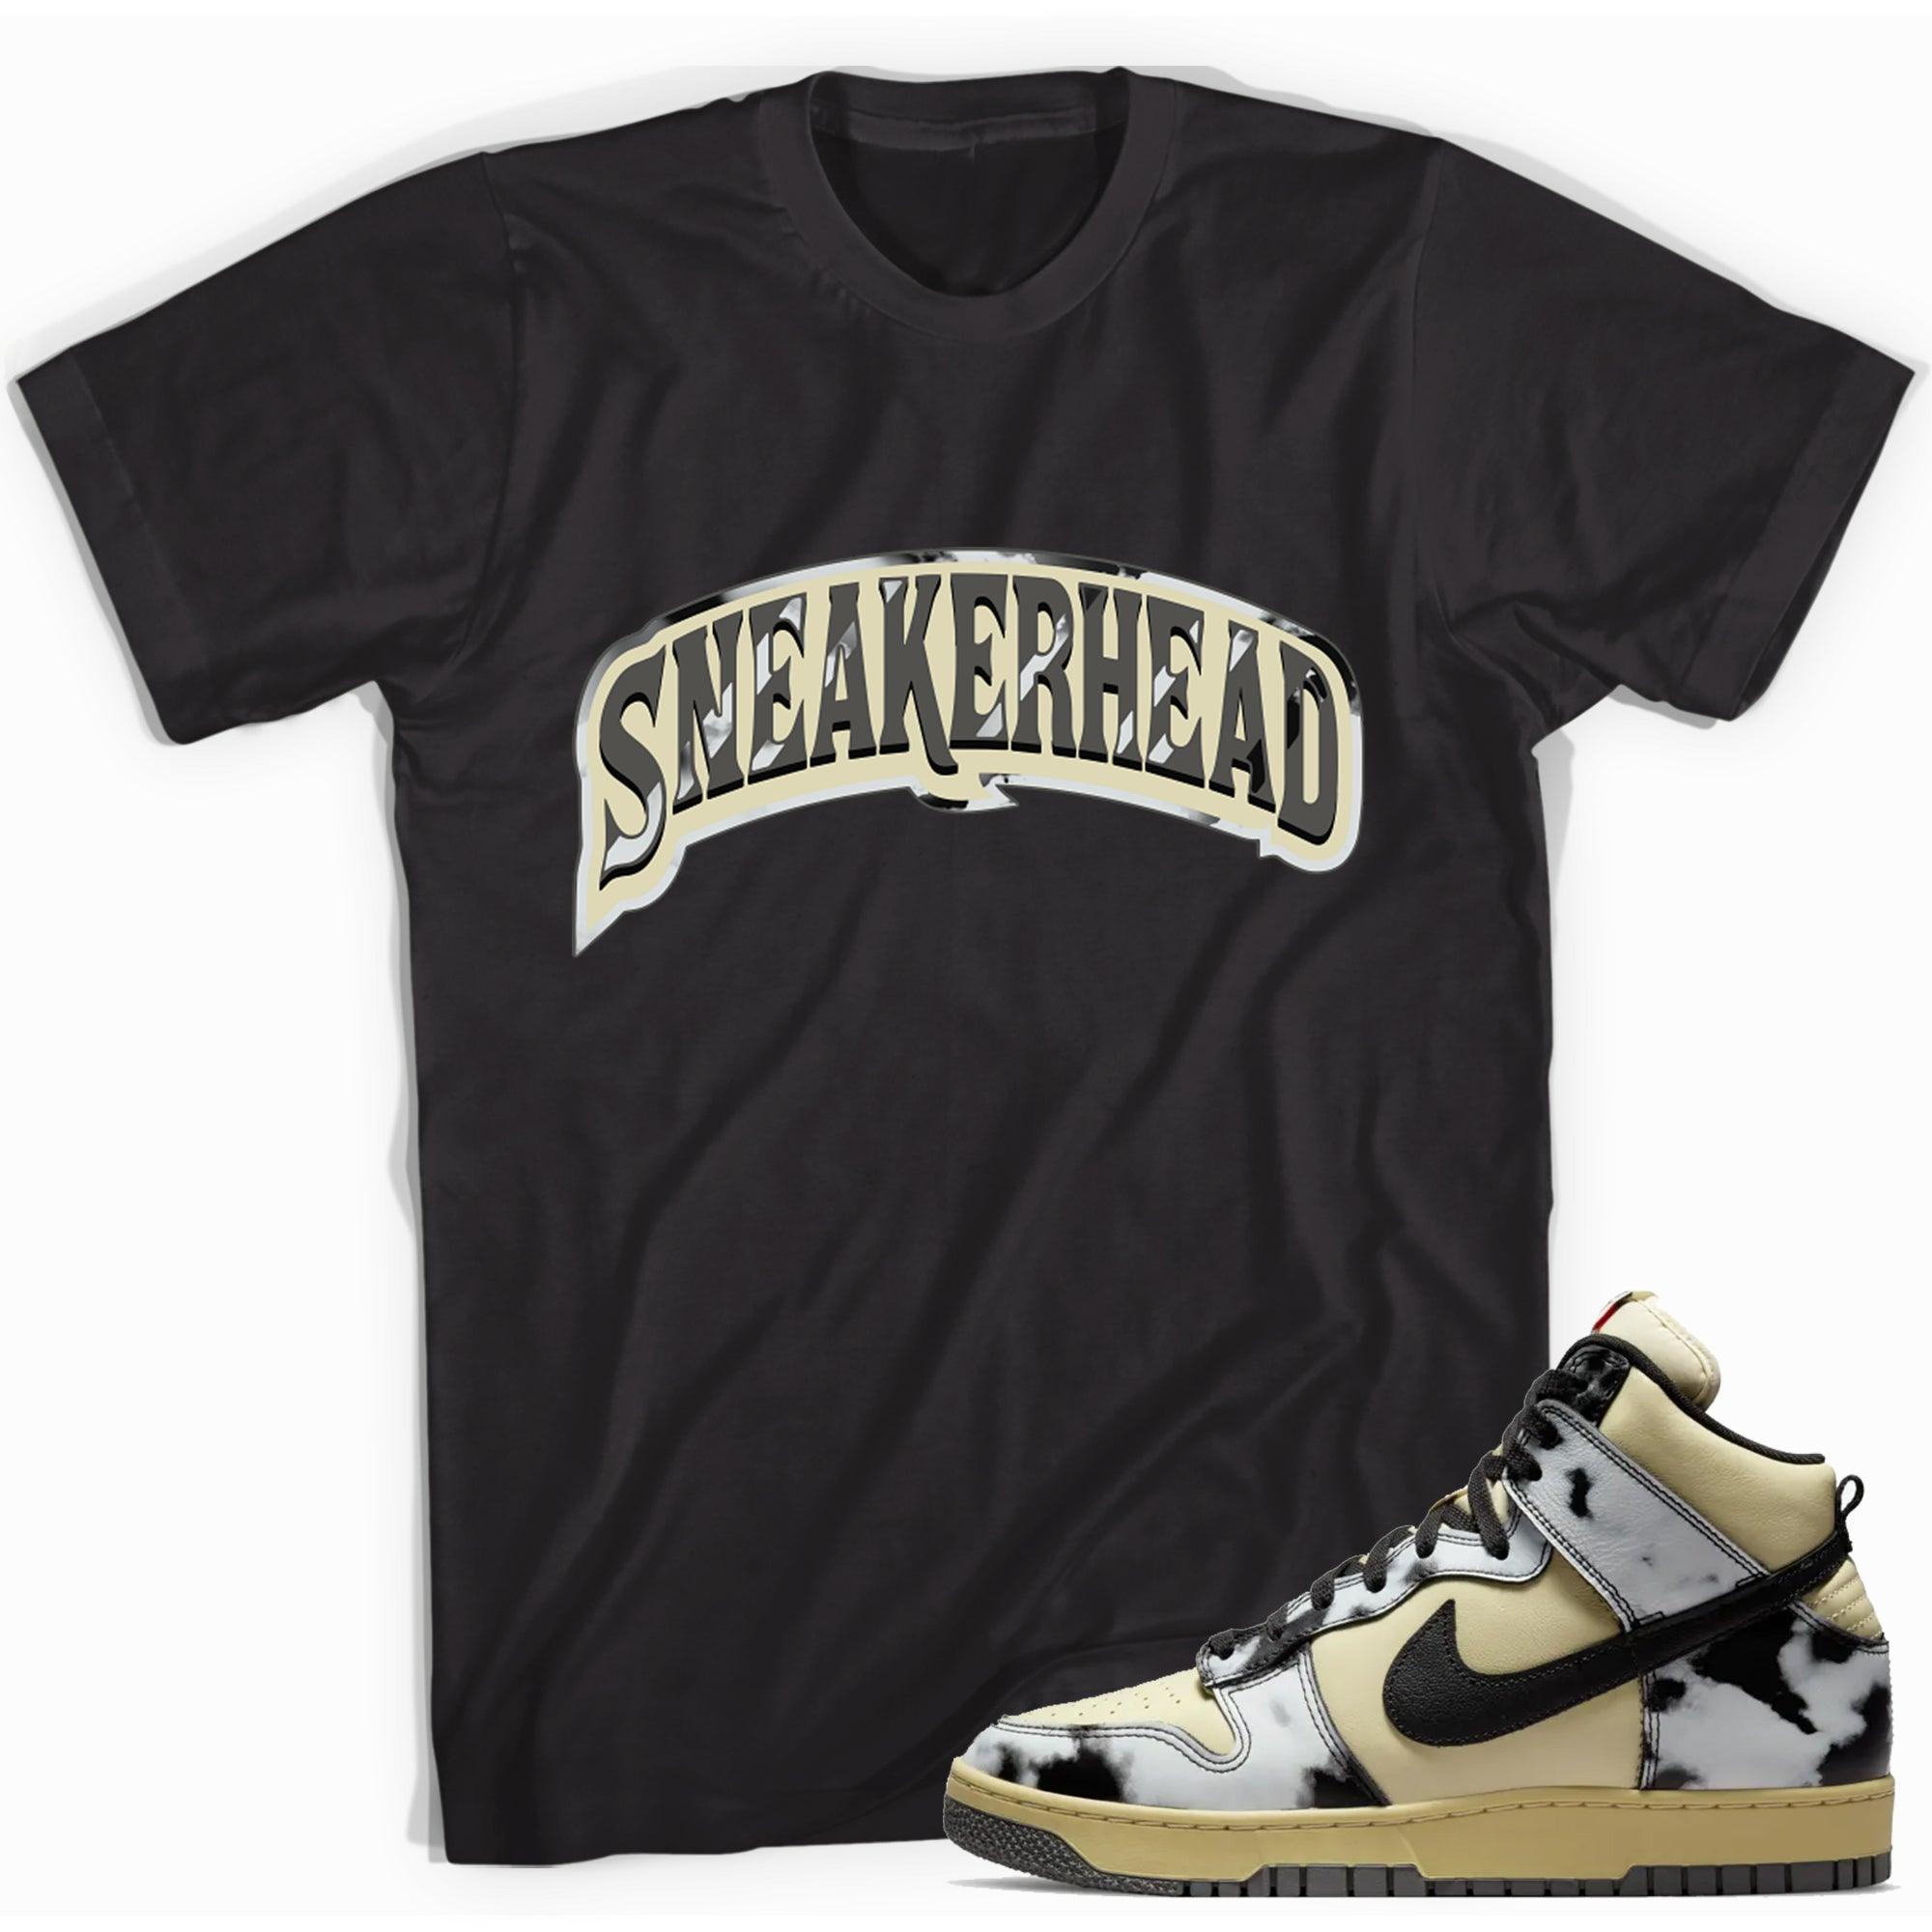 Sneakerhead Shirt 1985 Dunk High Black Acid Wash photo